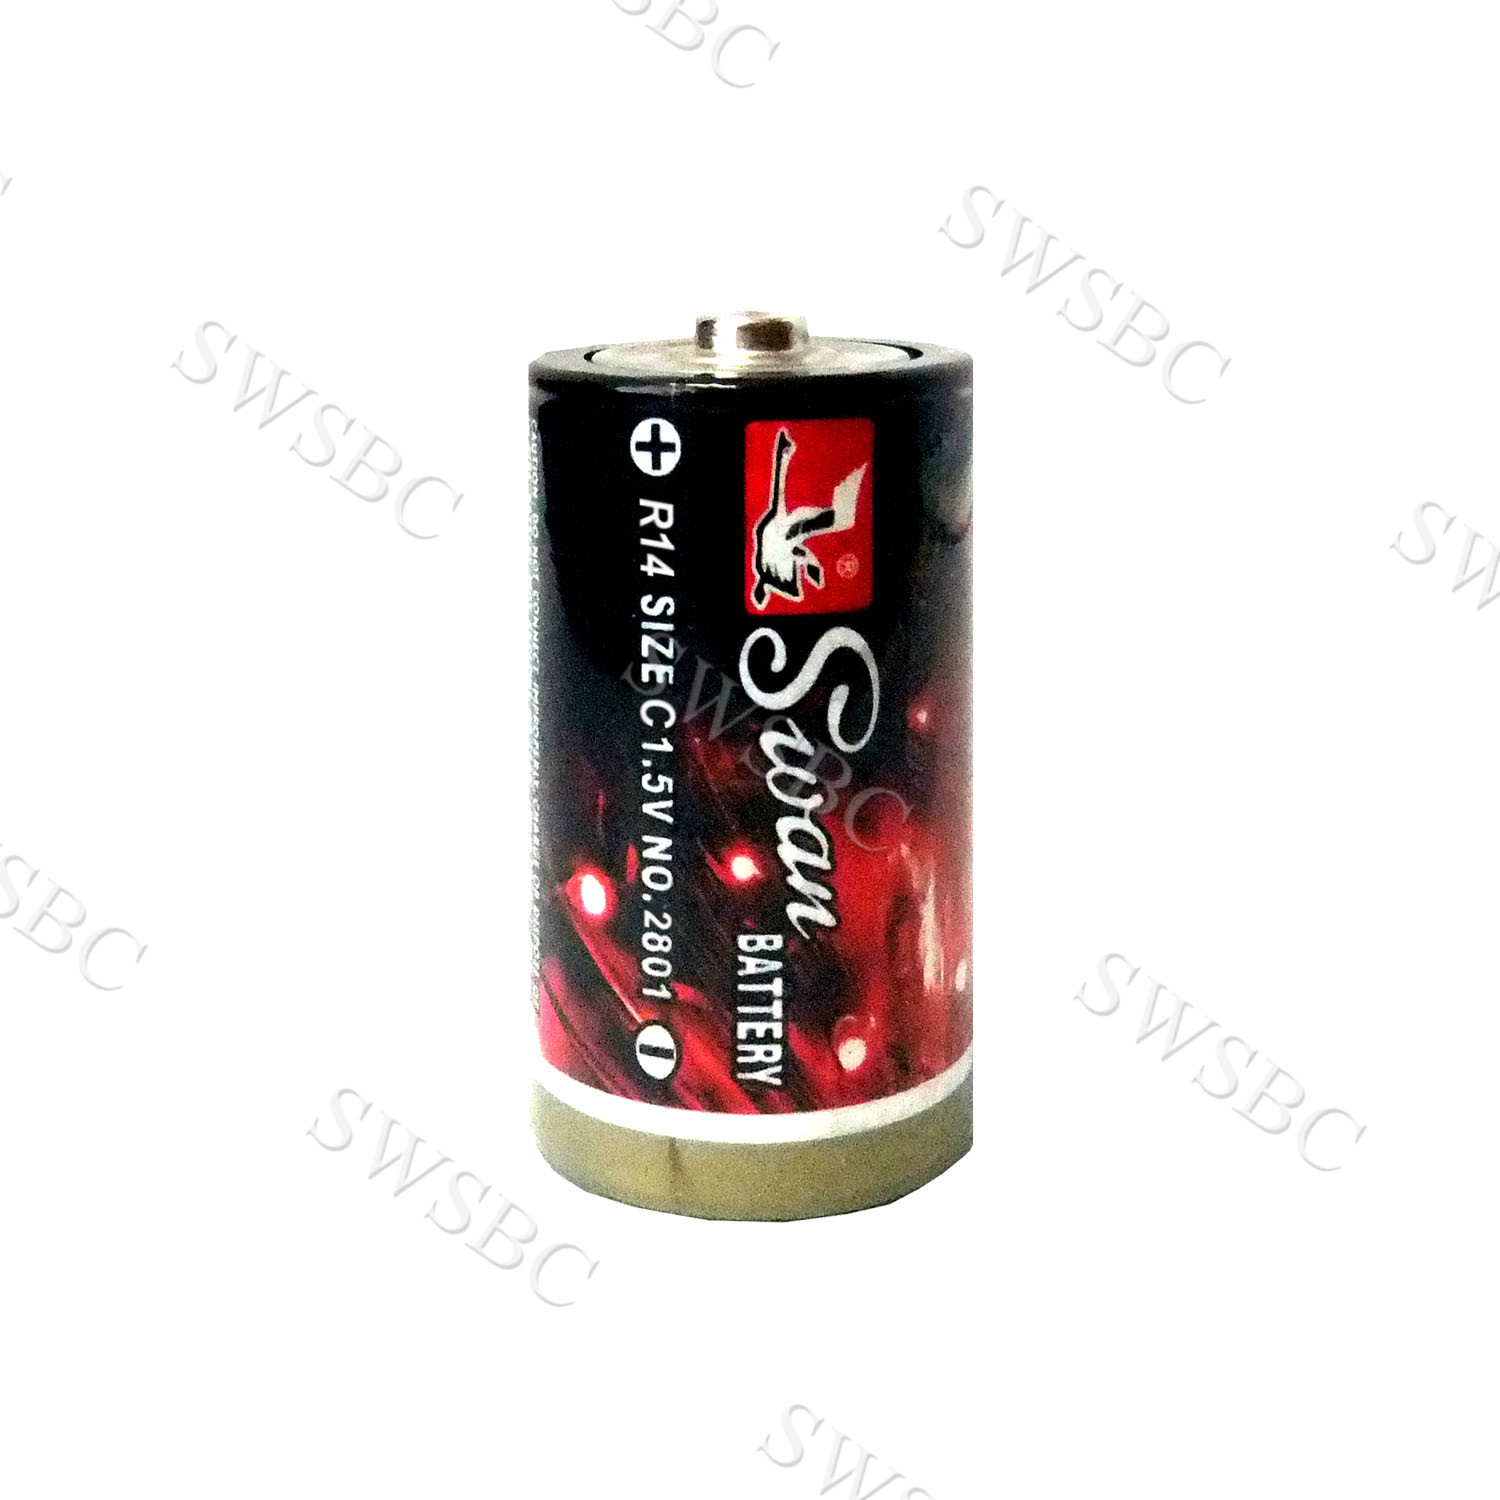 SWAN Brand carbon zinc Battery R14